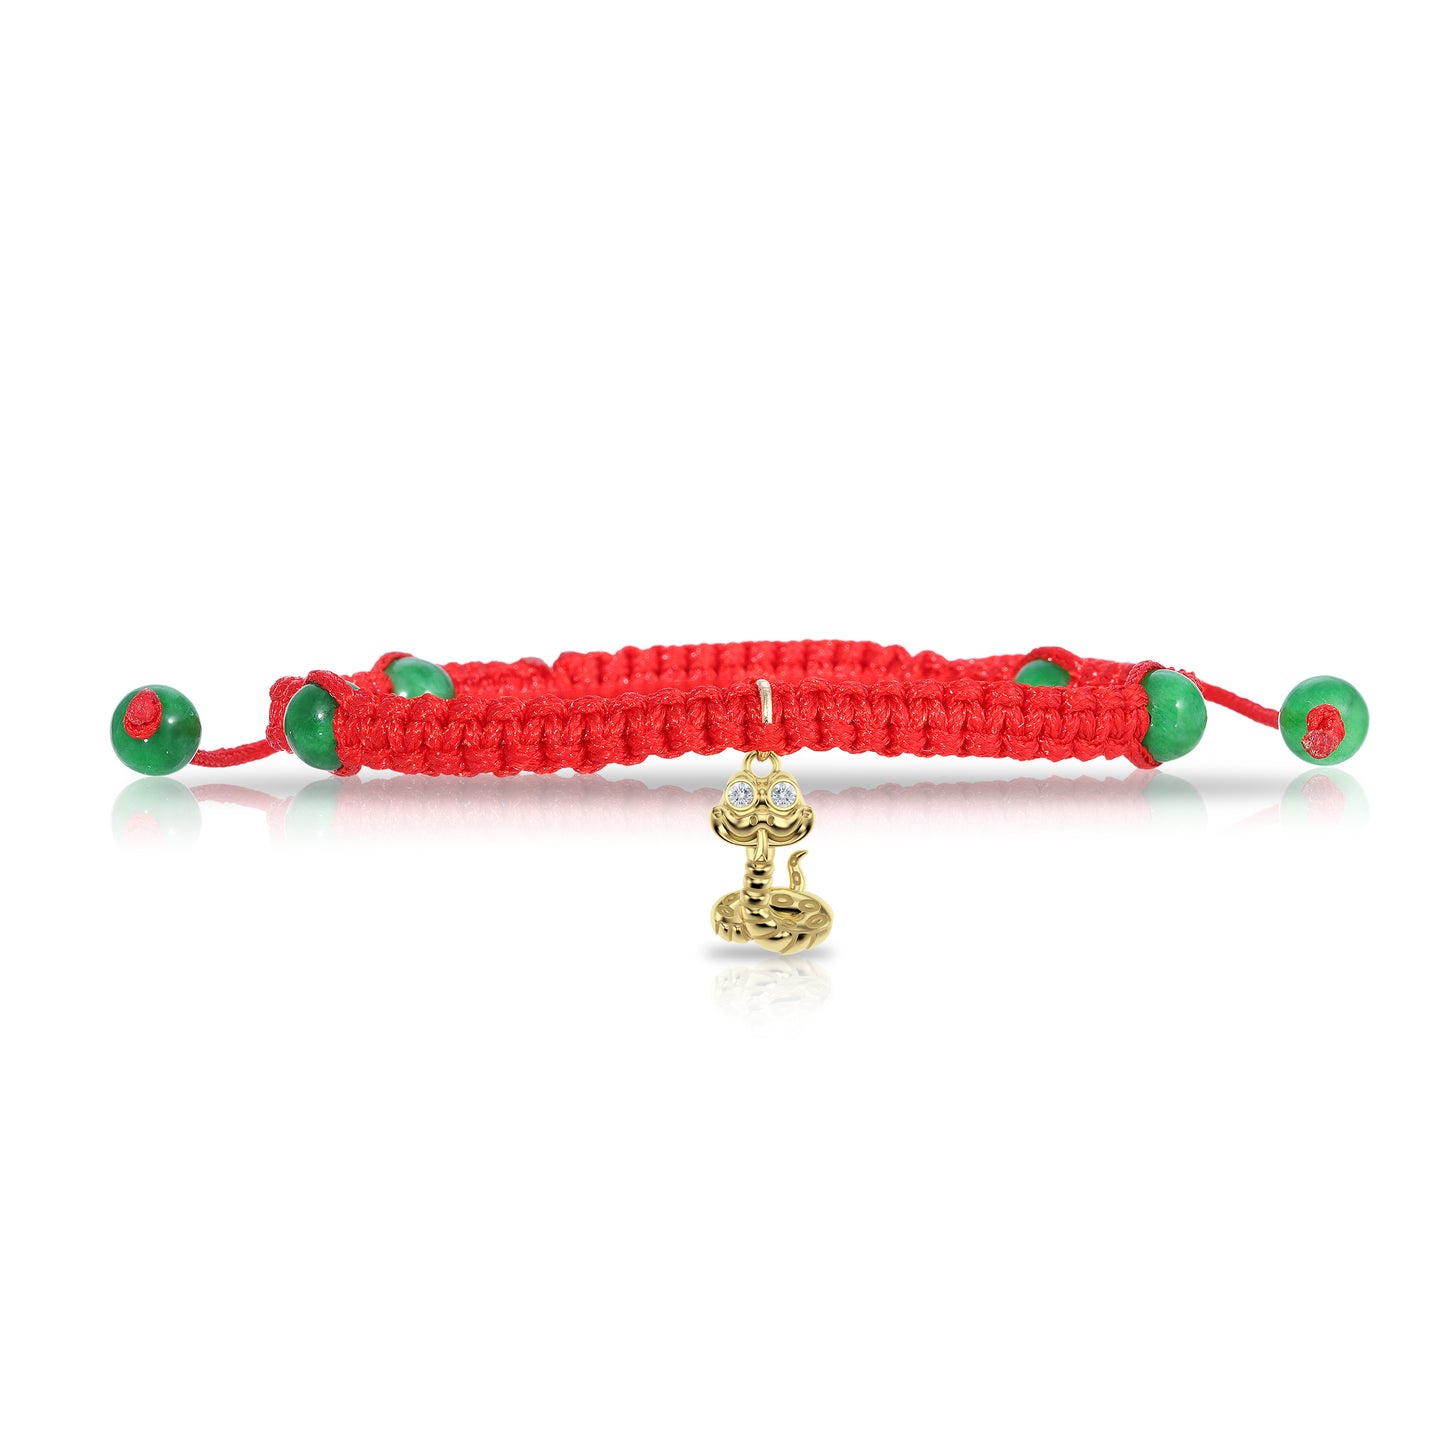 Bracelet with Snake Charm (Render)